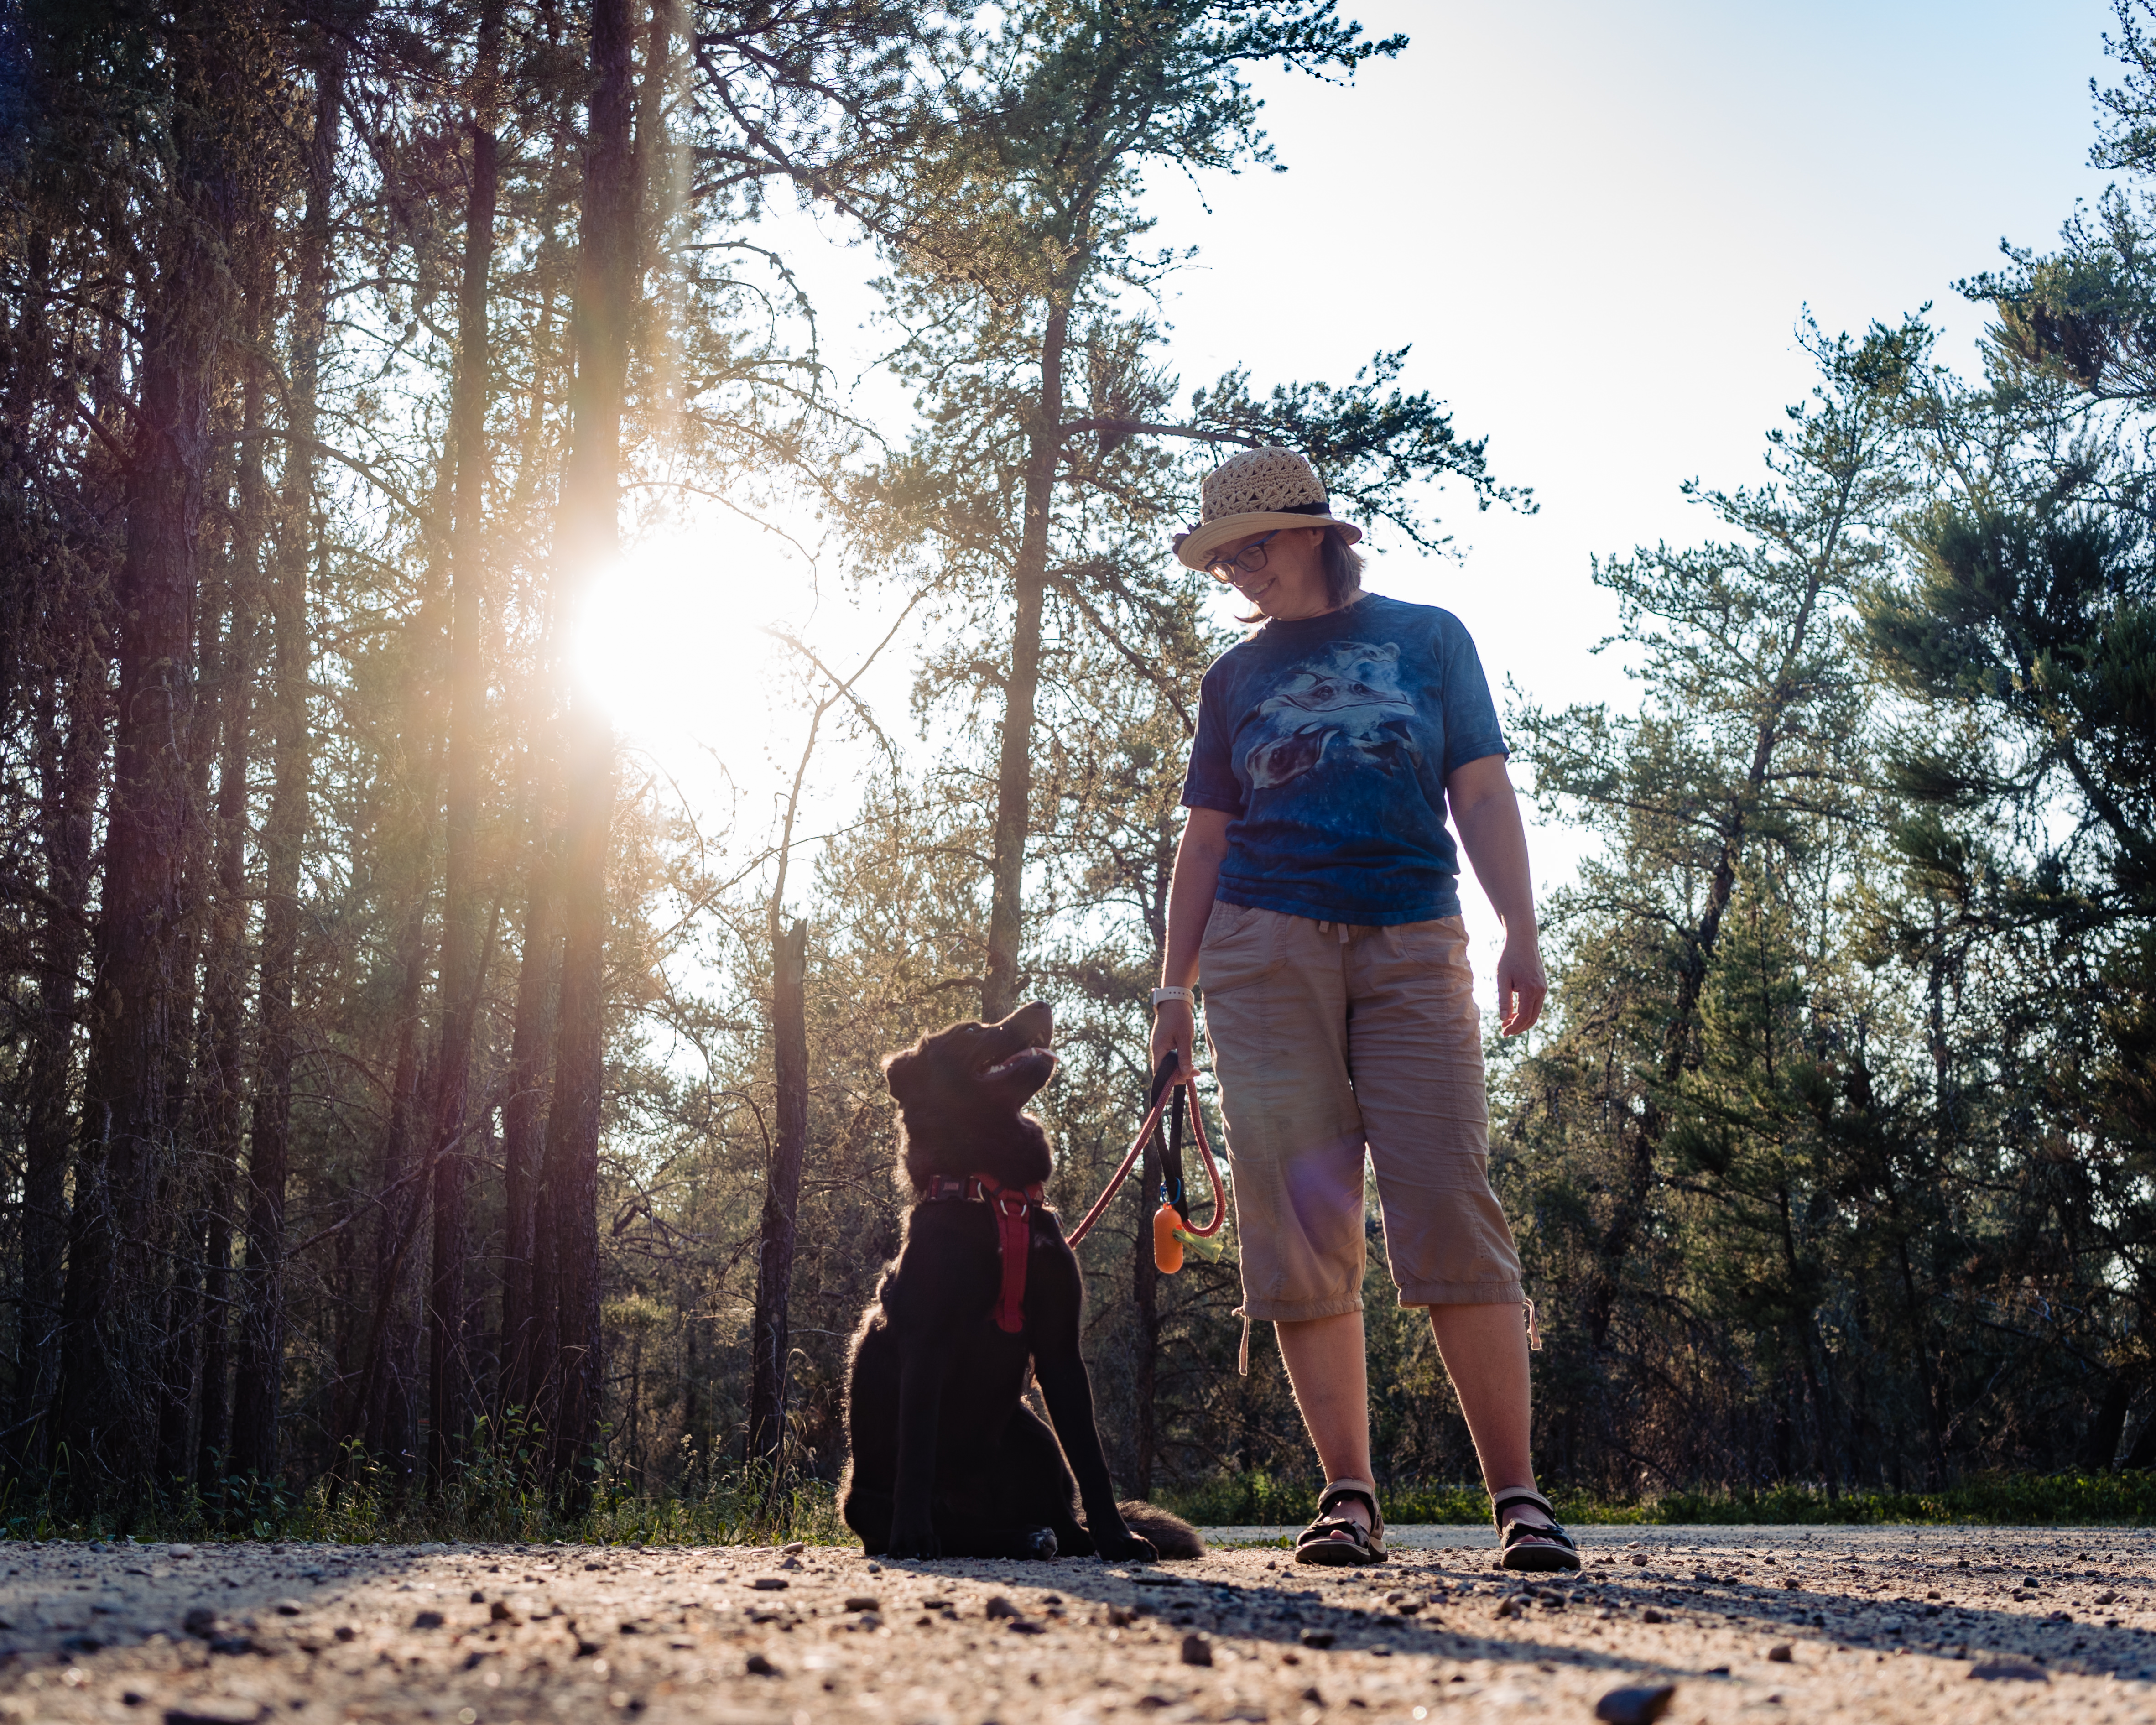 Mara and Olena at Moose Lake Campground · Photo by The 38 Photography